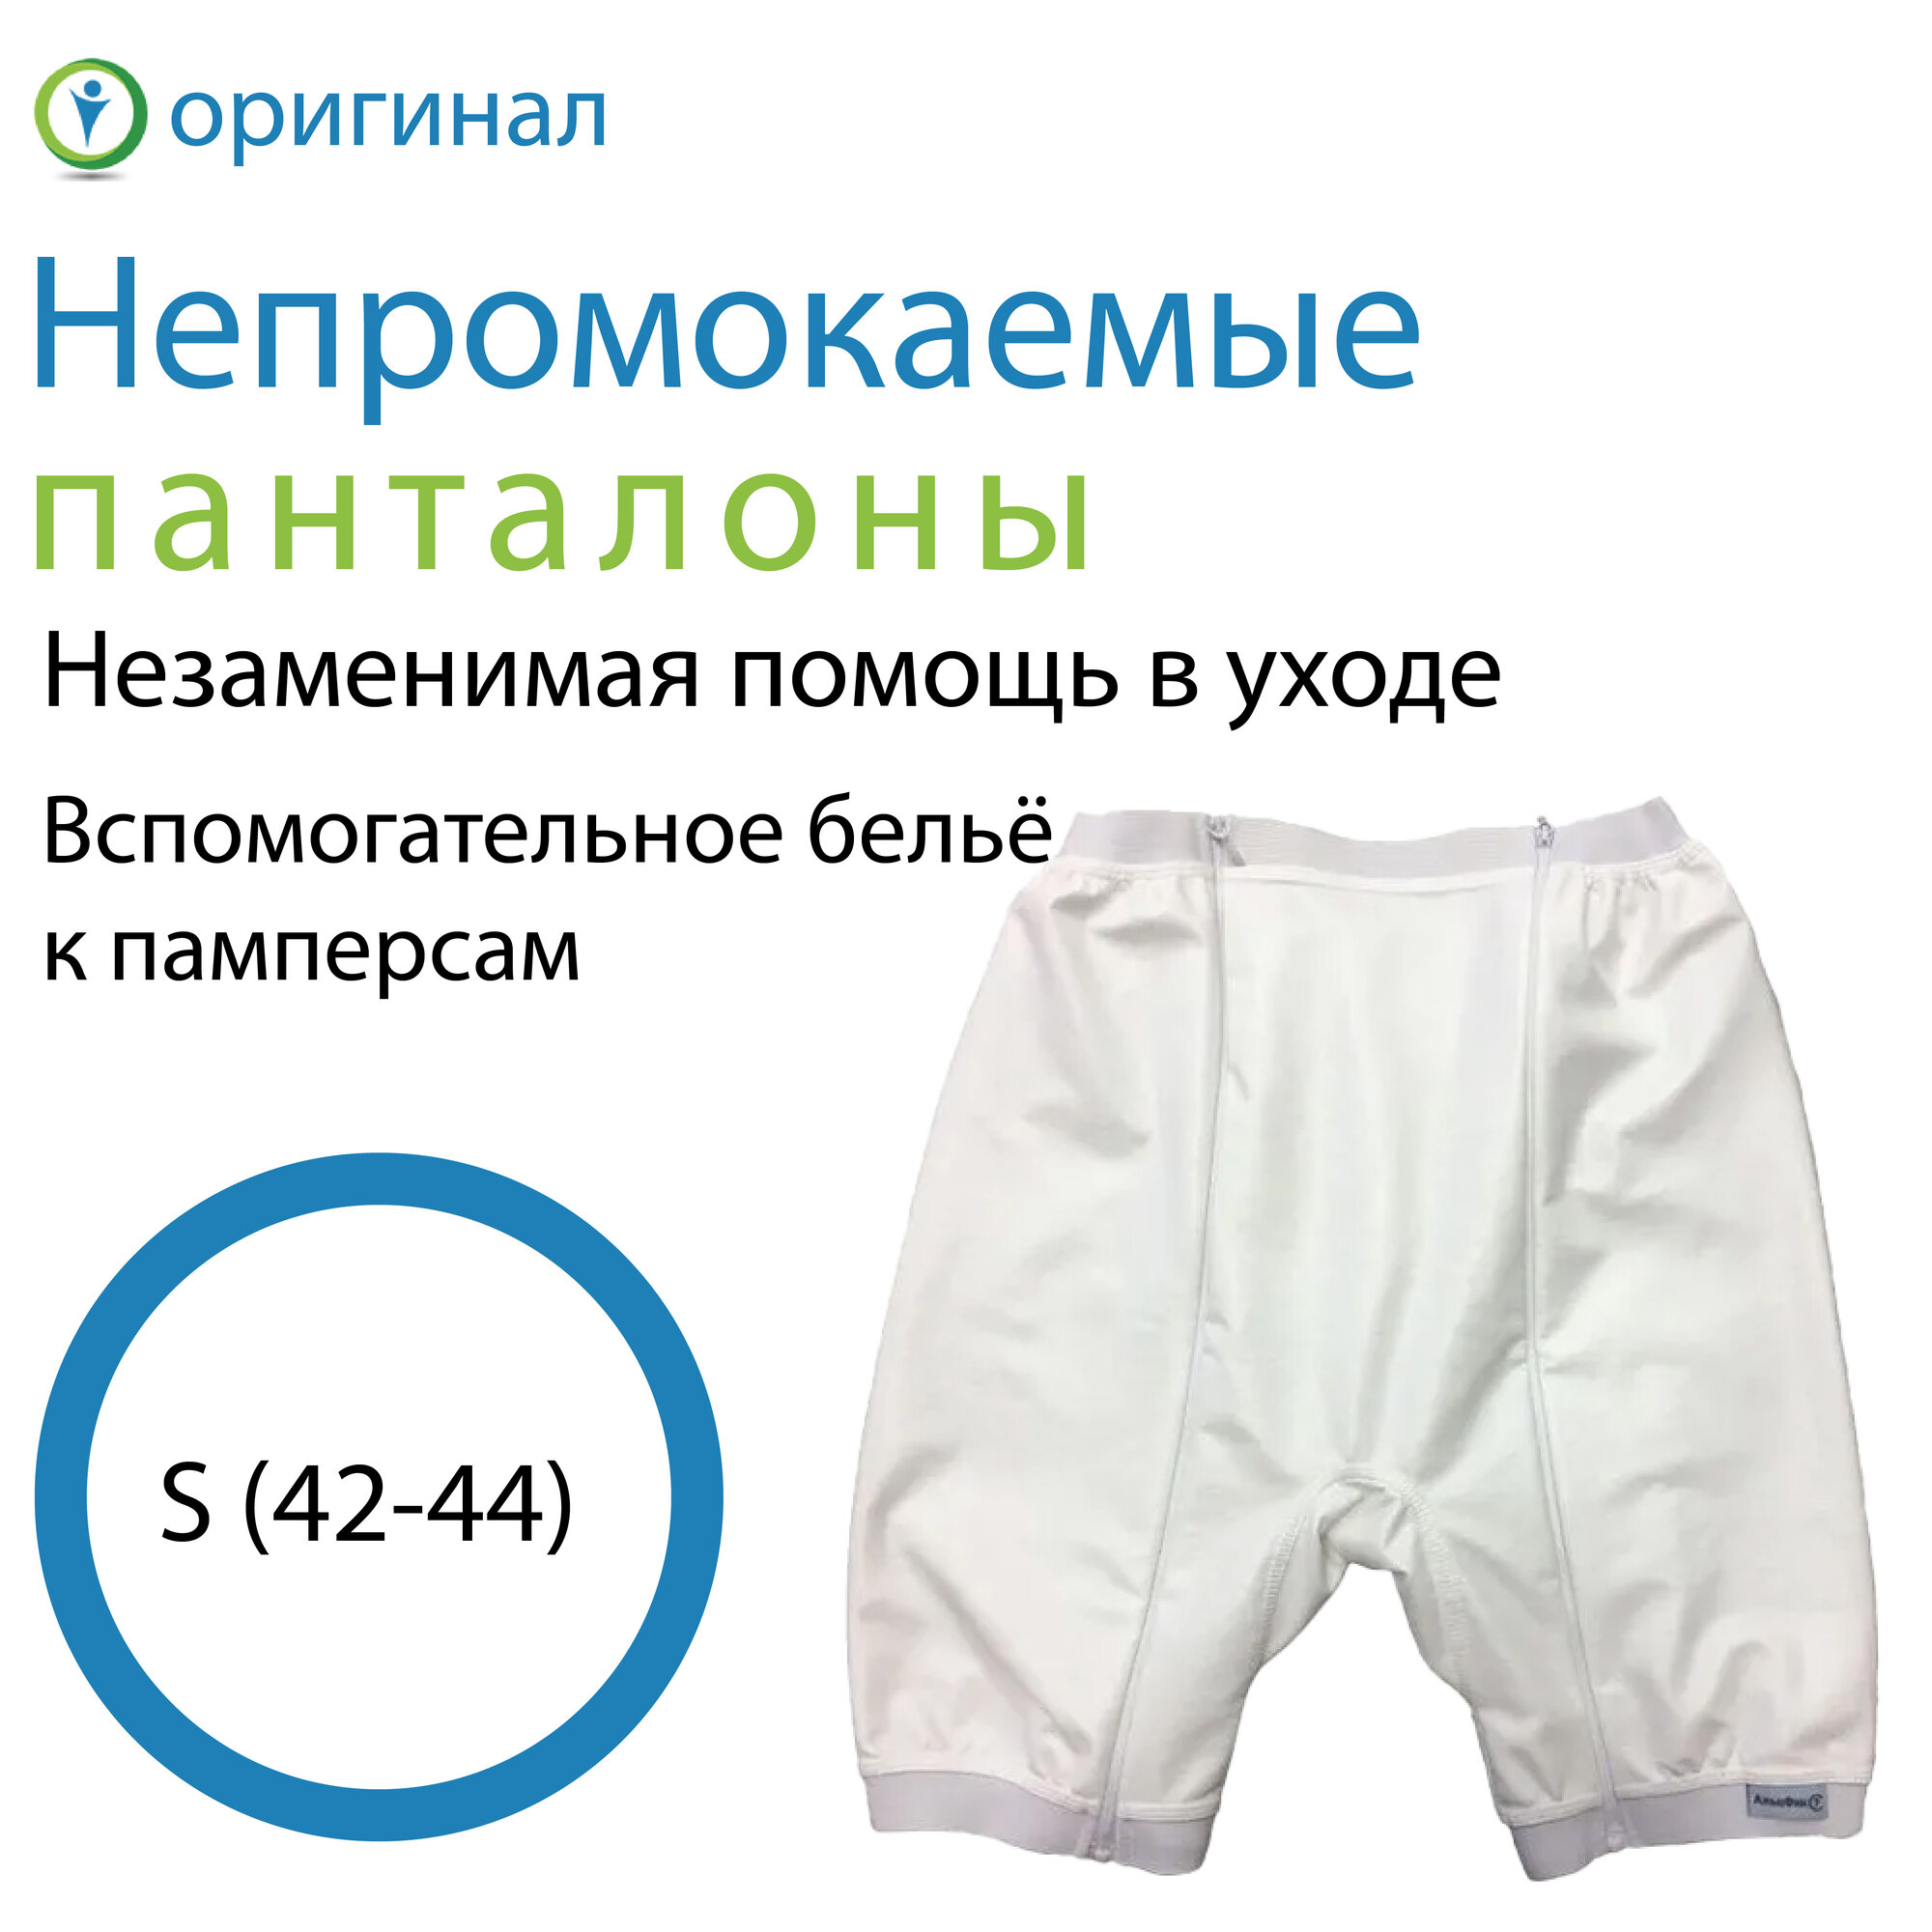 Непромокаемые панталоны, размер S (42-44)